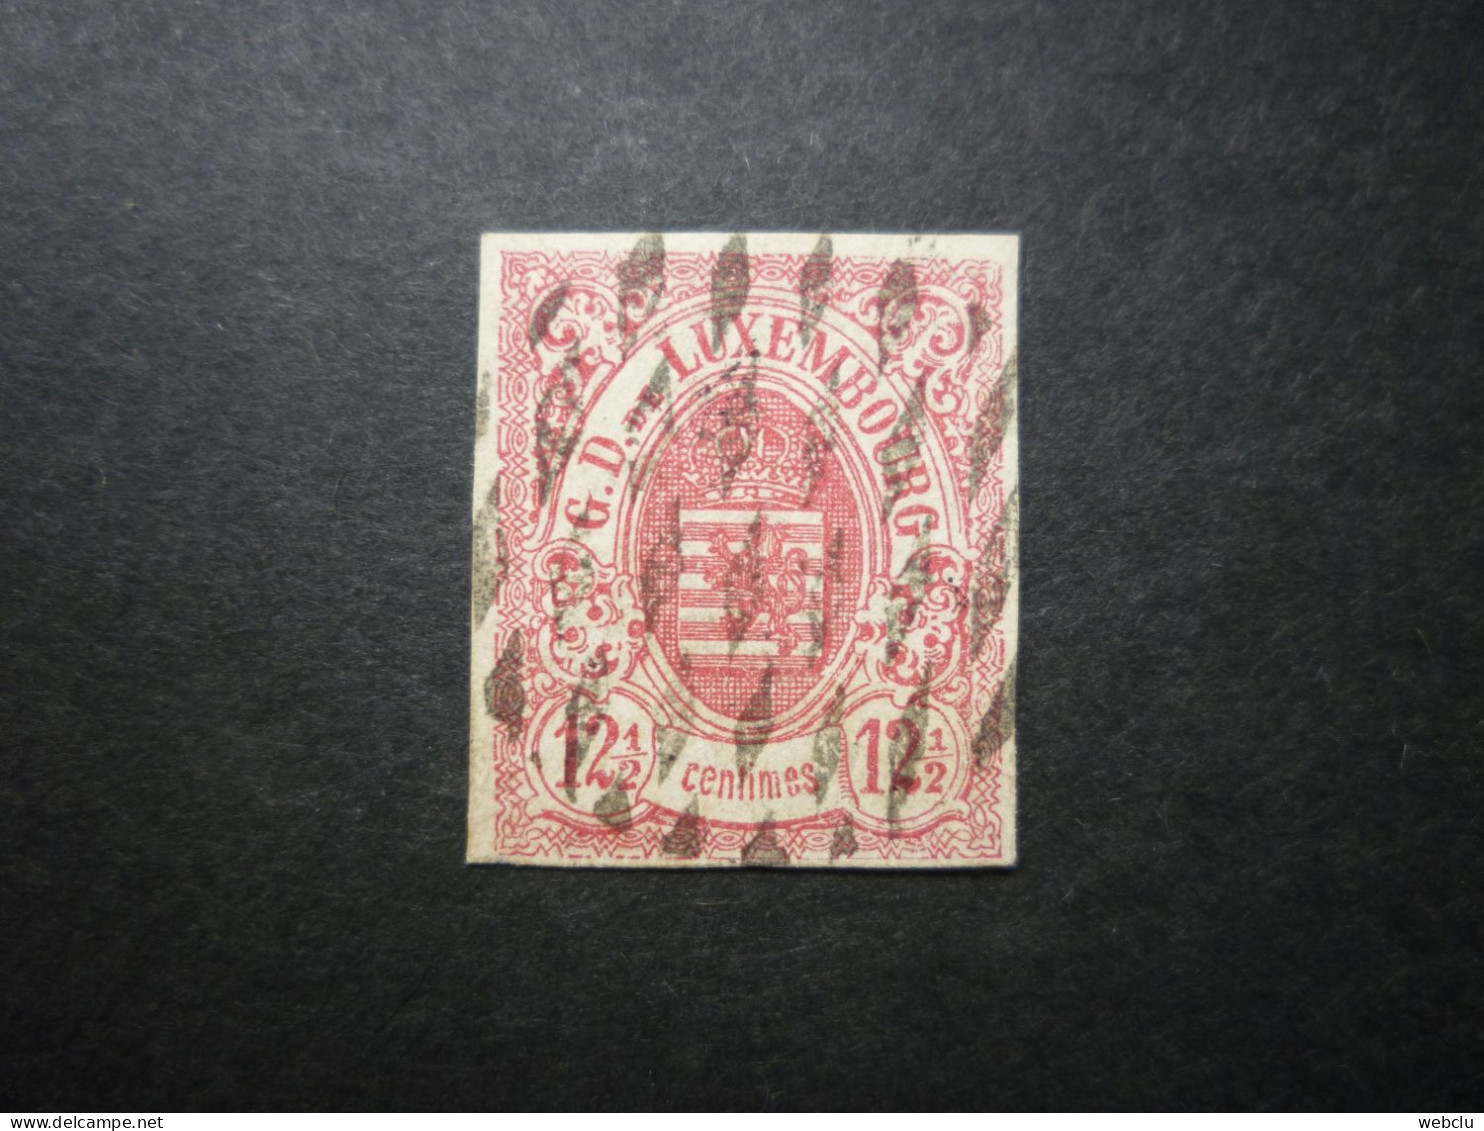 Luxemburg Luxembourg Armoiries 1859 Mi 7 O, Sehr Gut Gerandet, Rauten-Stempel Ettelbruck, PRACHT!! - 1859-1880 Coat Of Arms